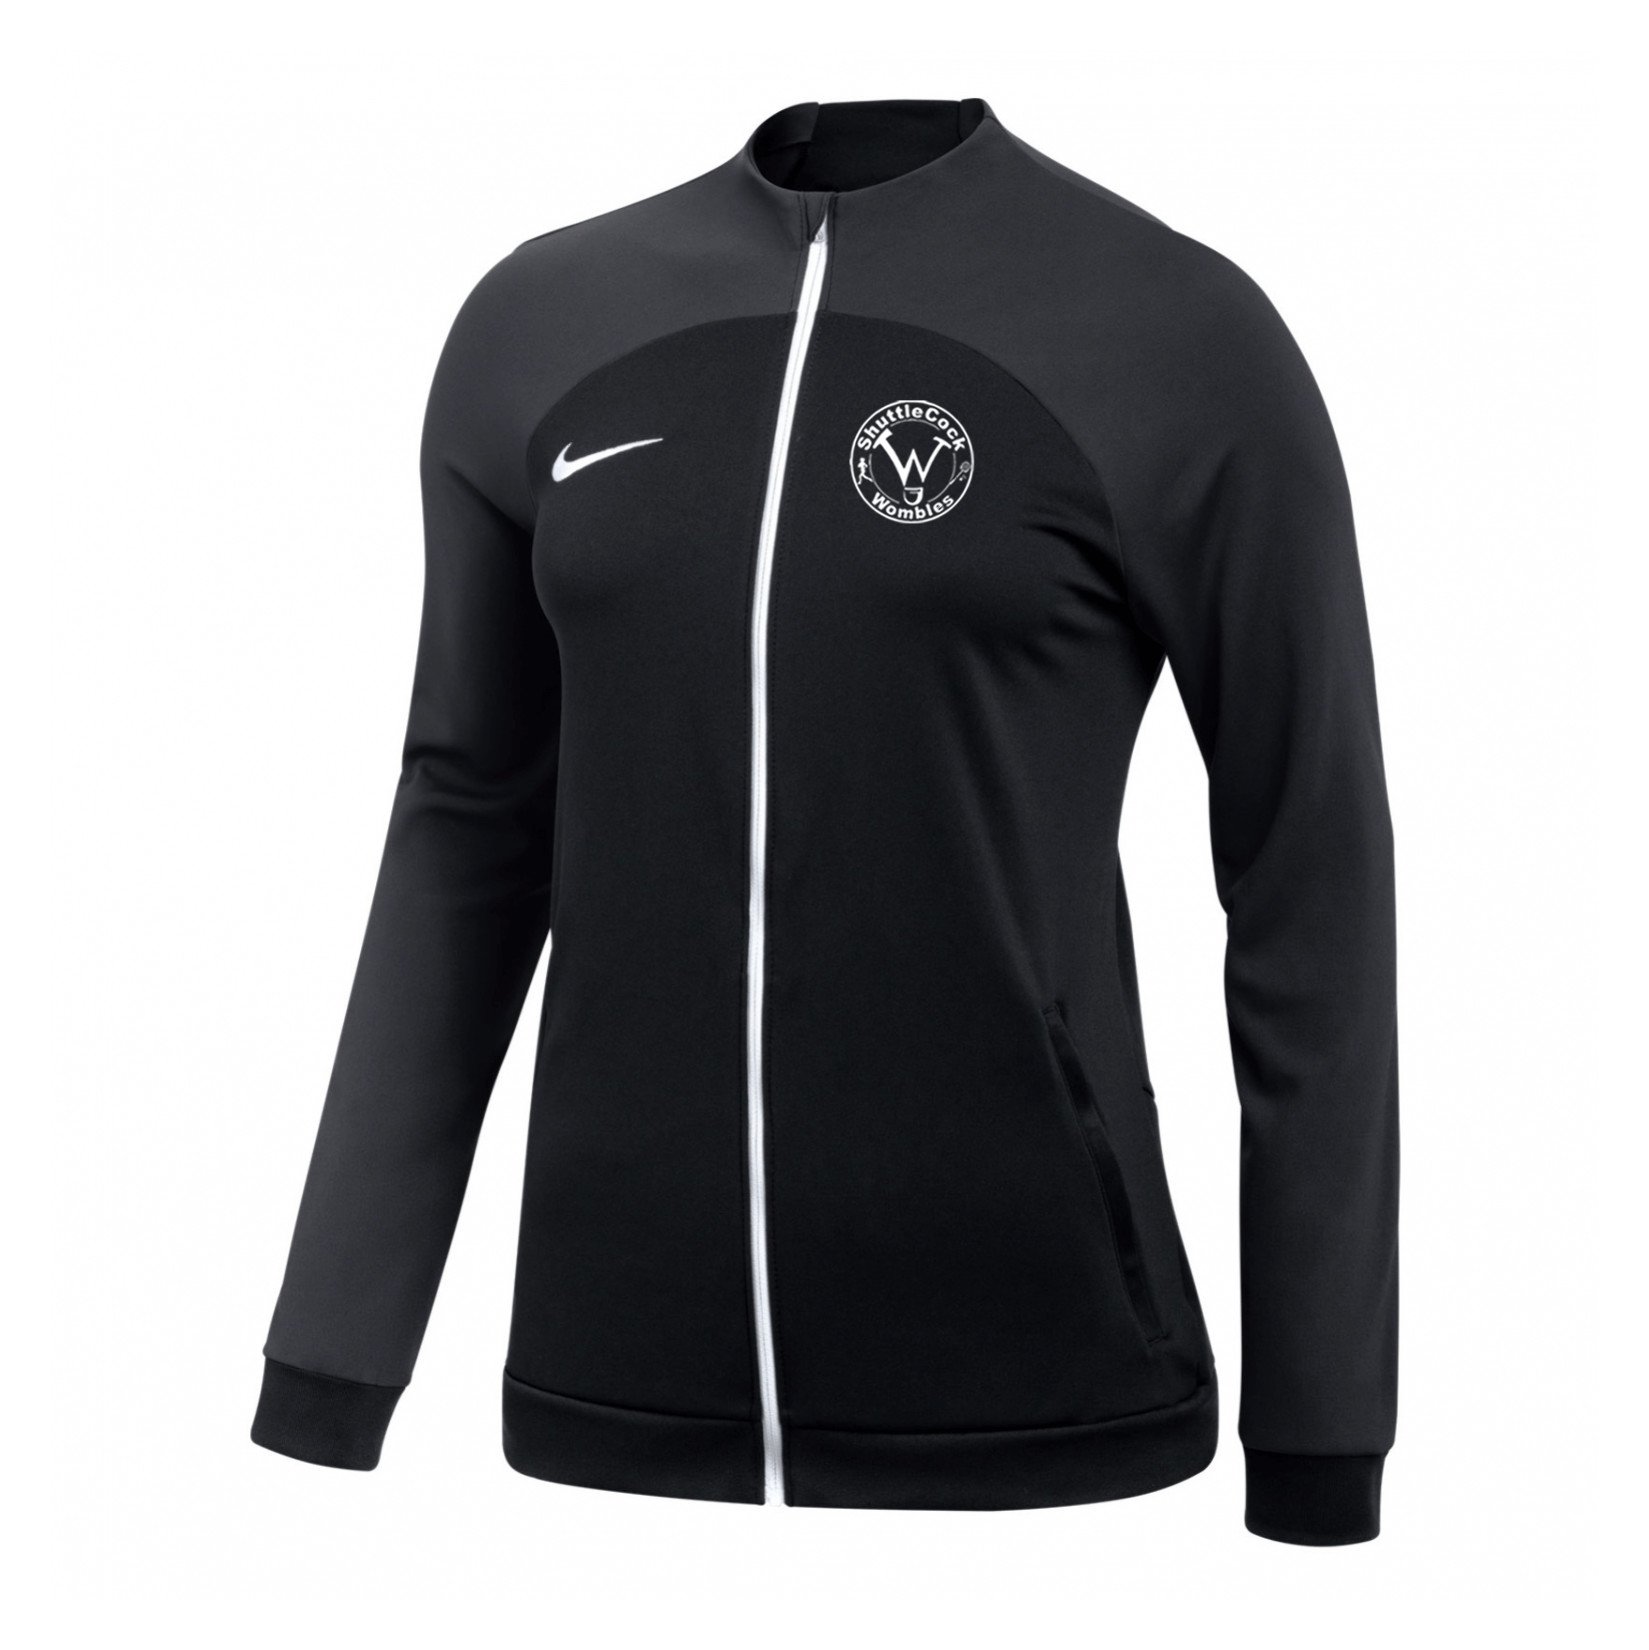 Nike Womens Academy Pro Track Jacket (W) Black-Anthracite-White